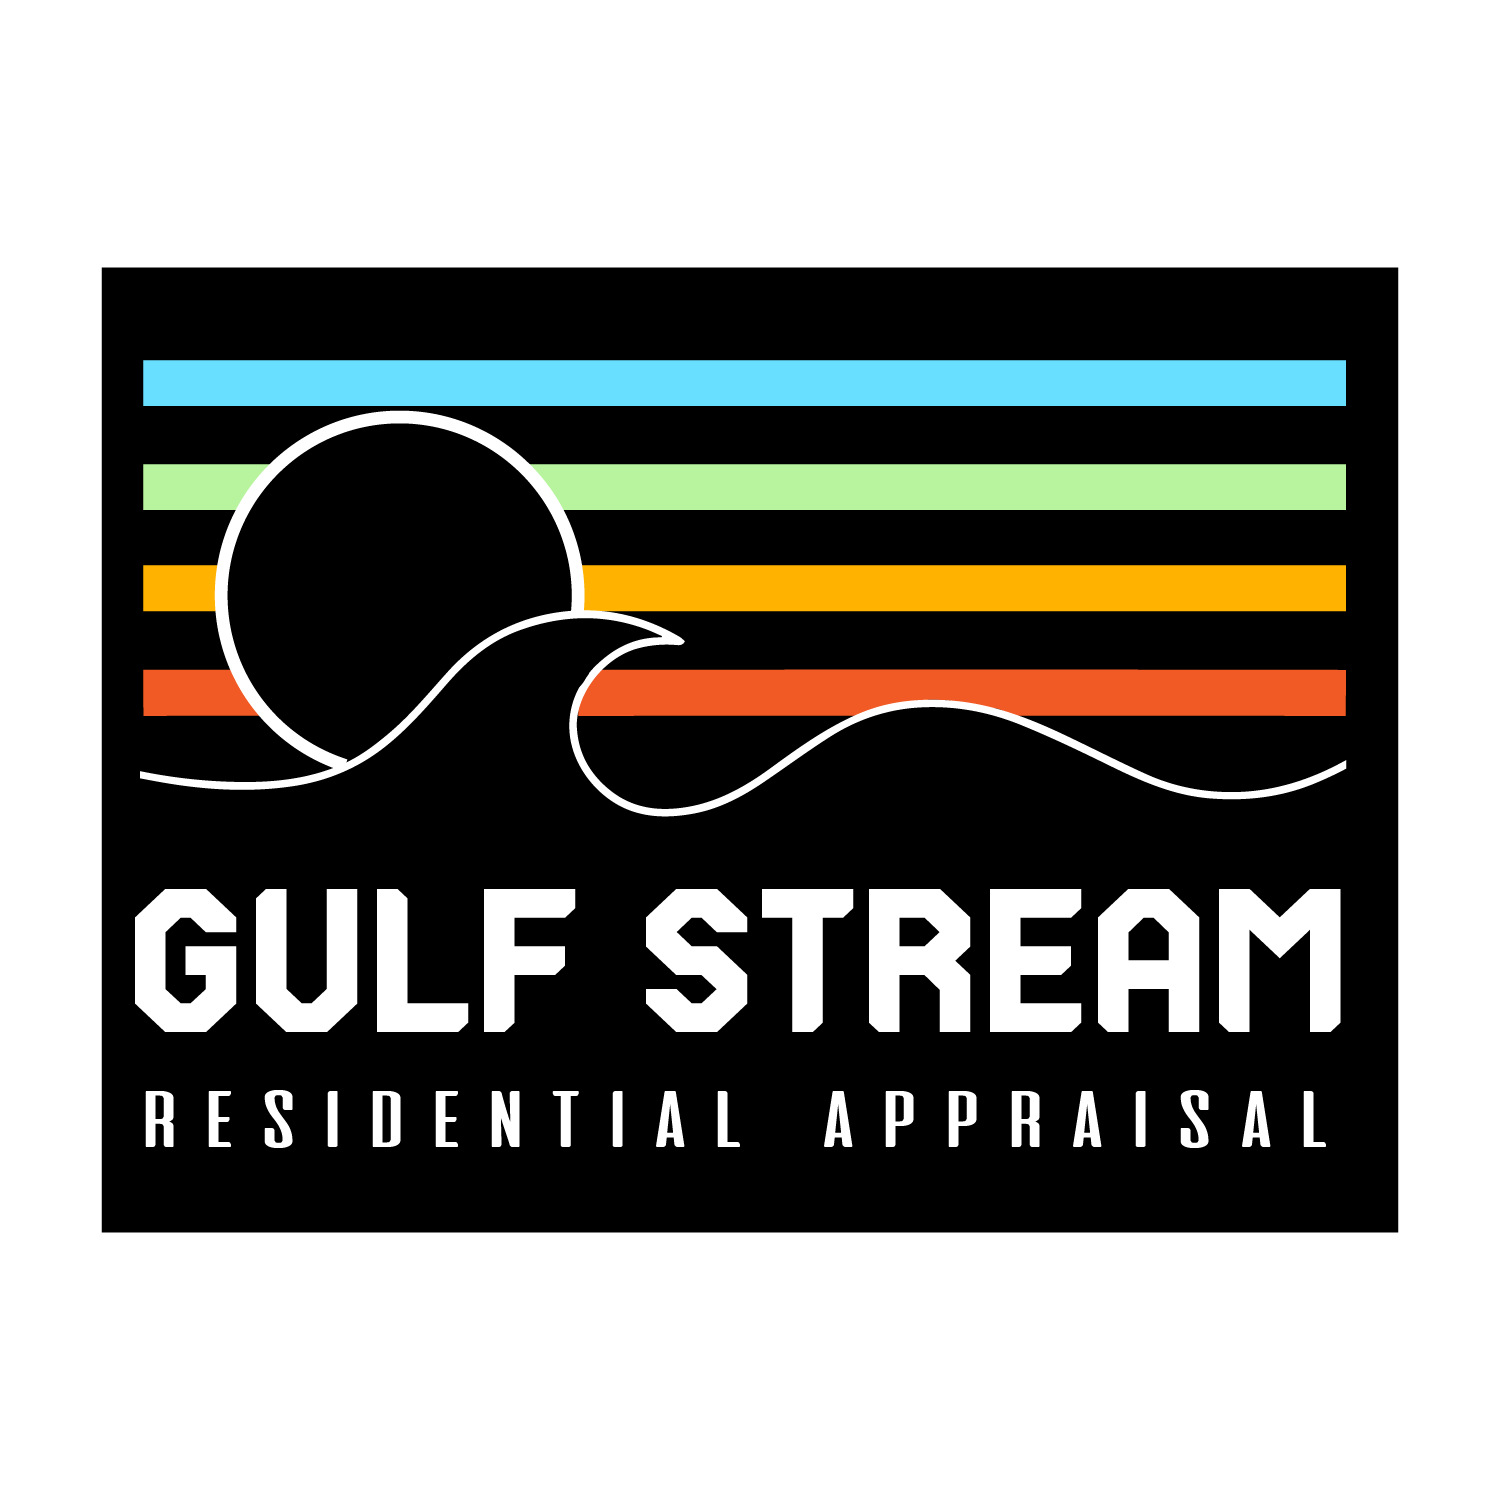 Gulf Stream Residential Appraisal